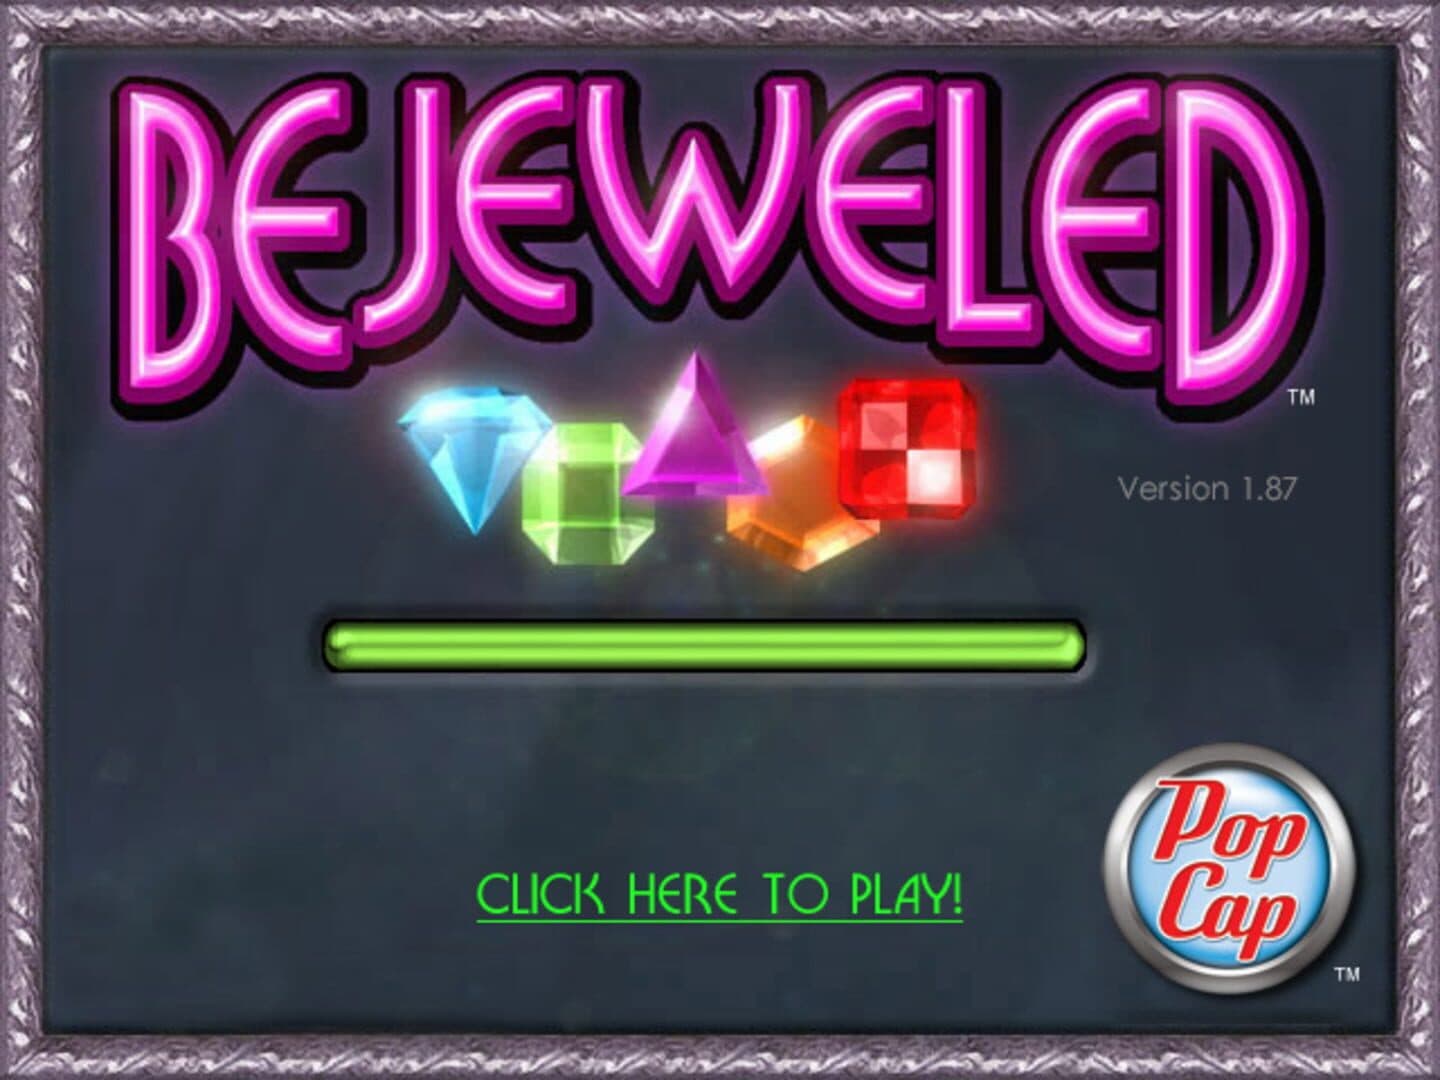 Bejeweled Image